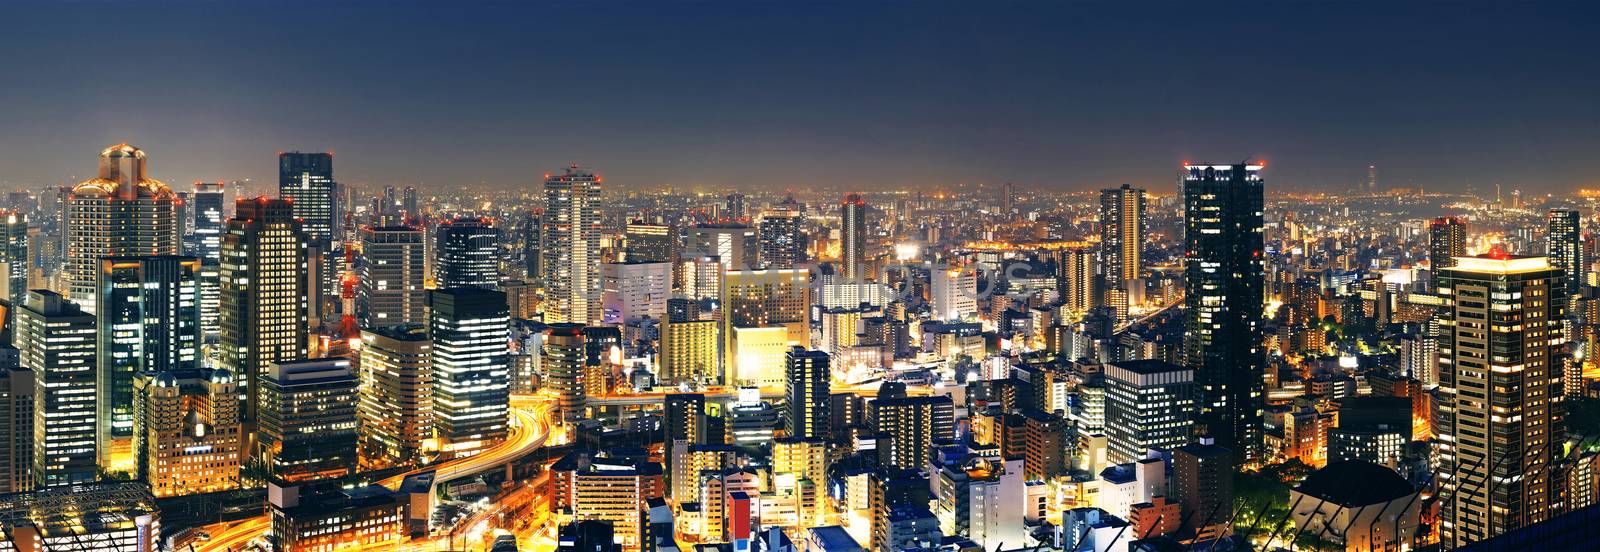 Panoramic Osaka at night, Japan  by cozyta